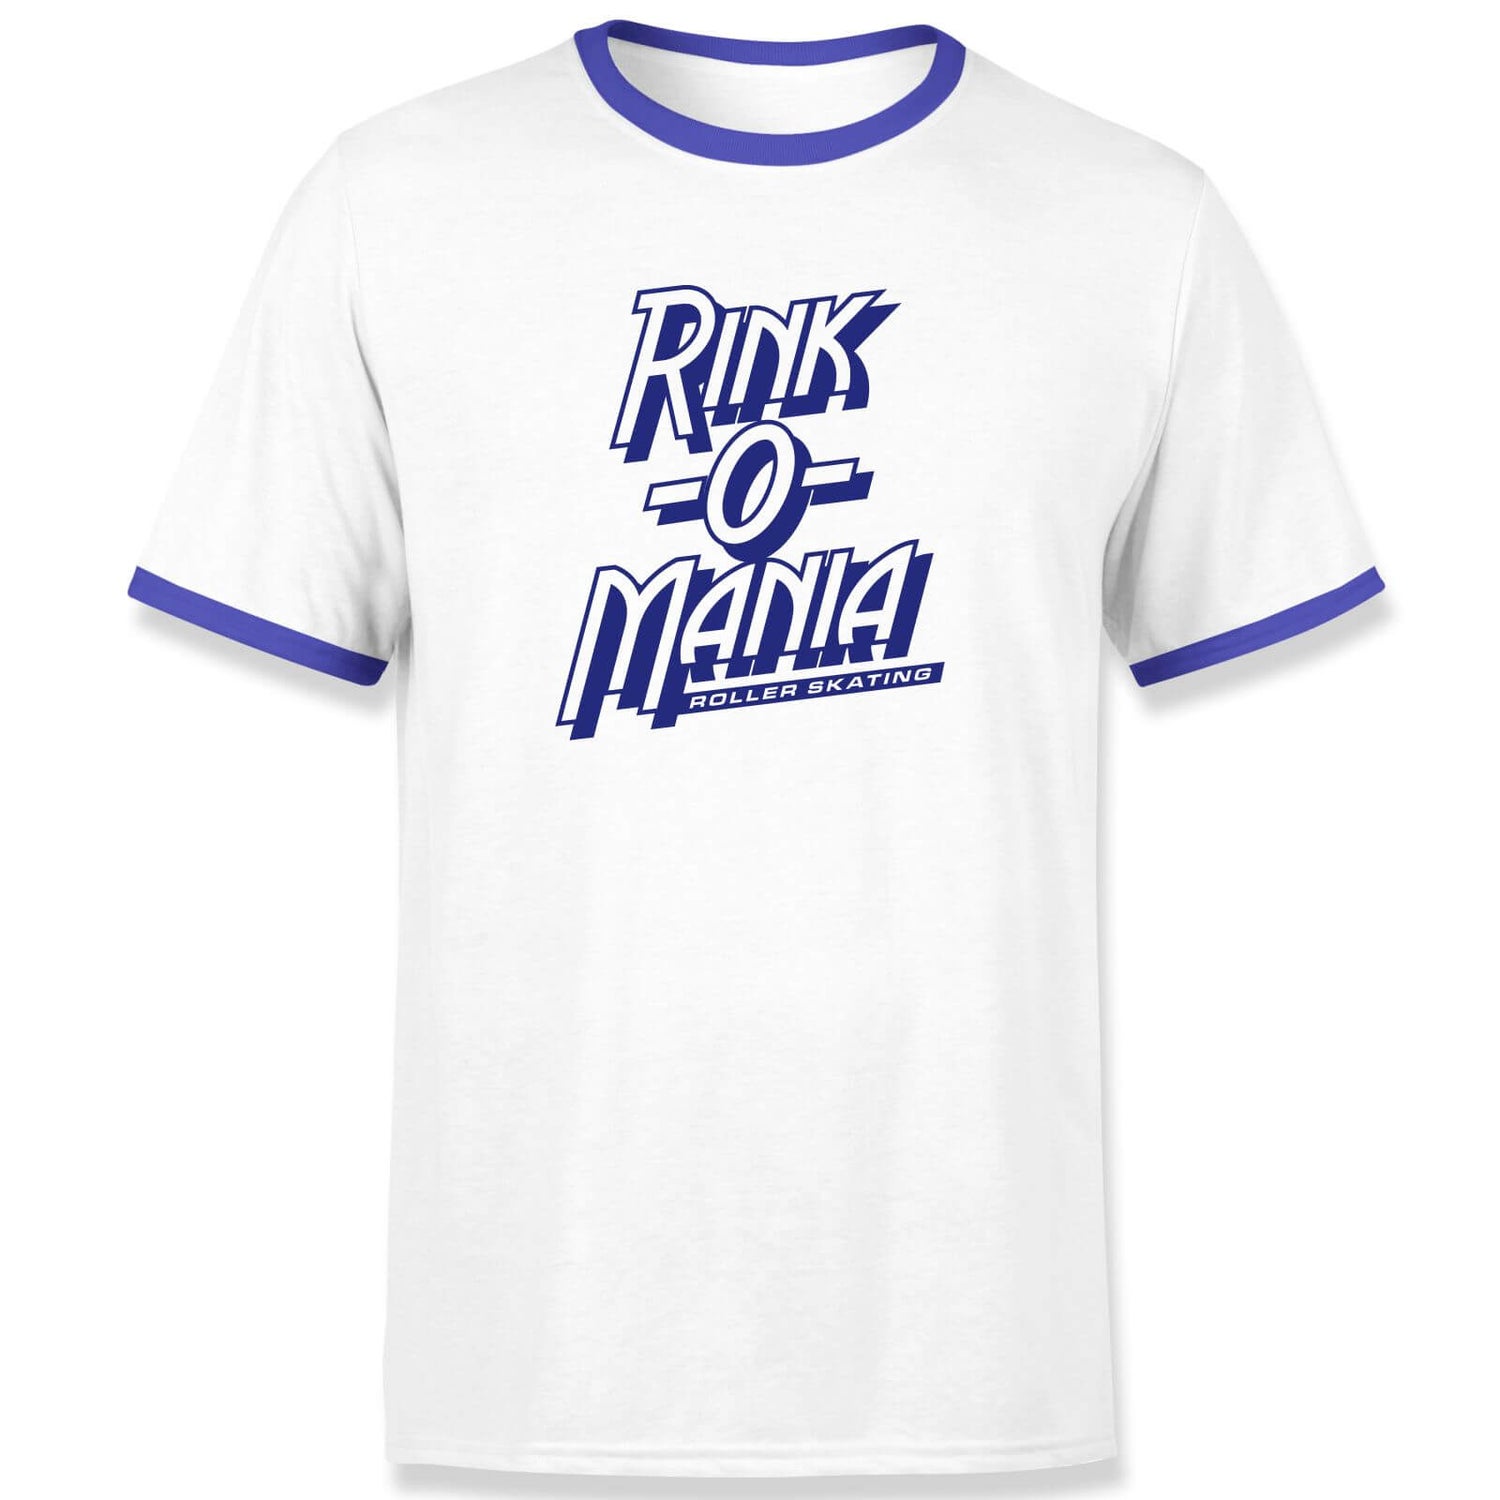 Stranger Things Rink-O-Mania Unisex Ringer T-shirt - Wit/Blauw - XL - Wit